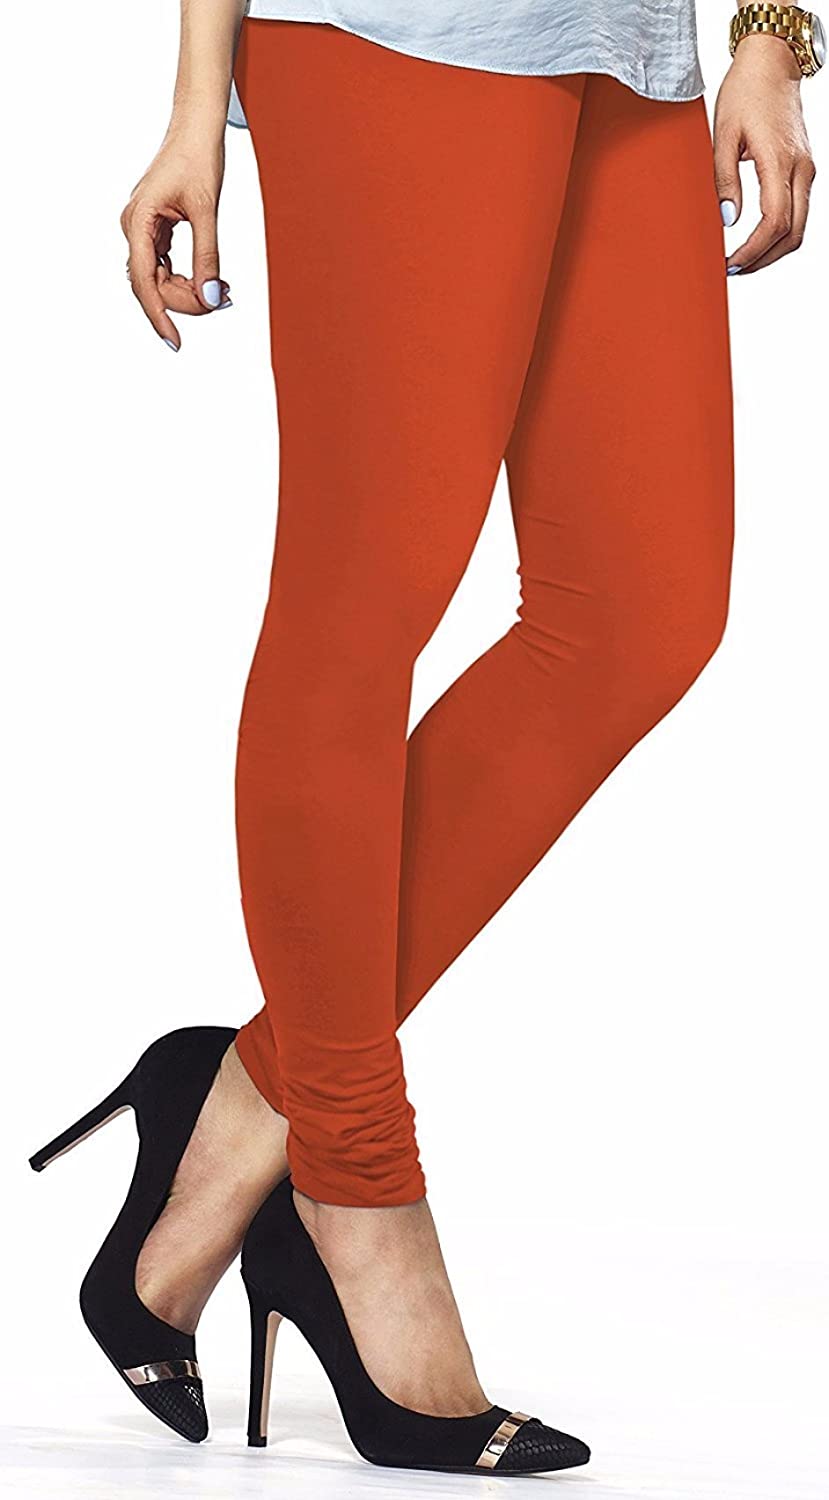 ladyline 4-Way Stretch Cotton Plain Leggings Churidar Long Yoga Pants Beige  at Amazon Women's Clothing store